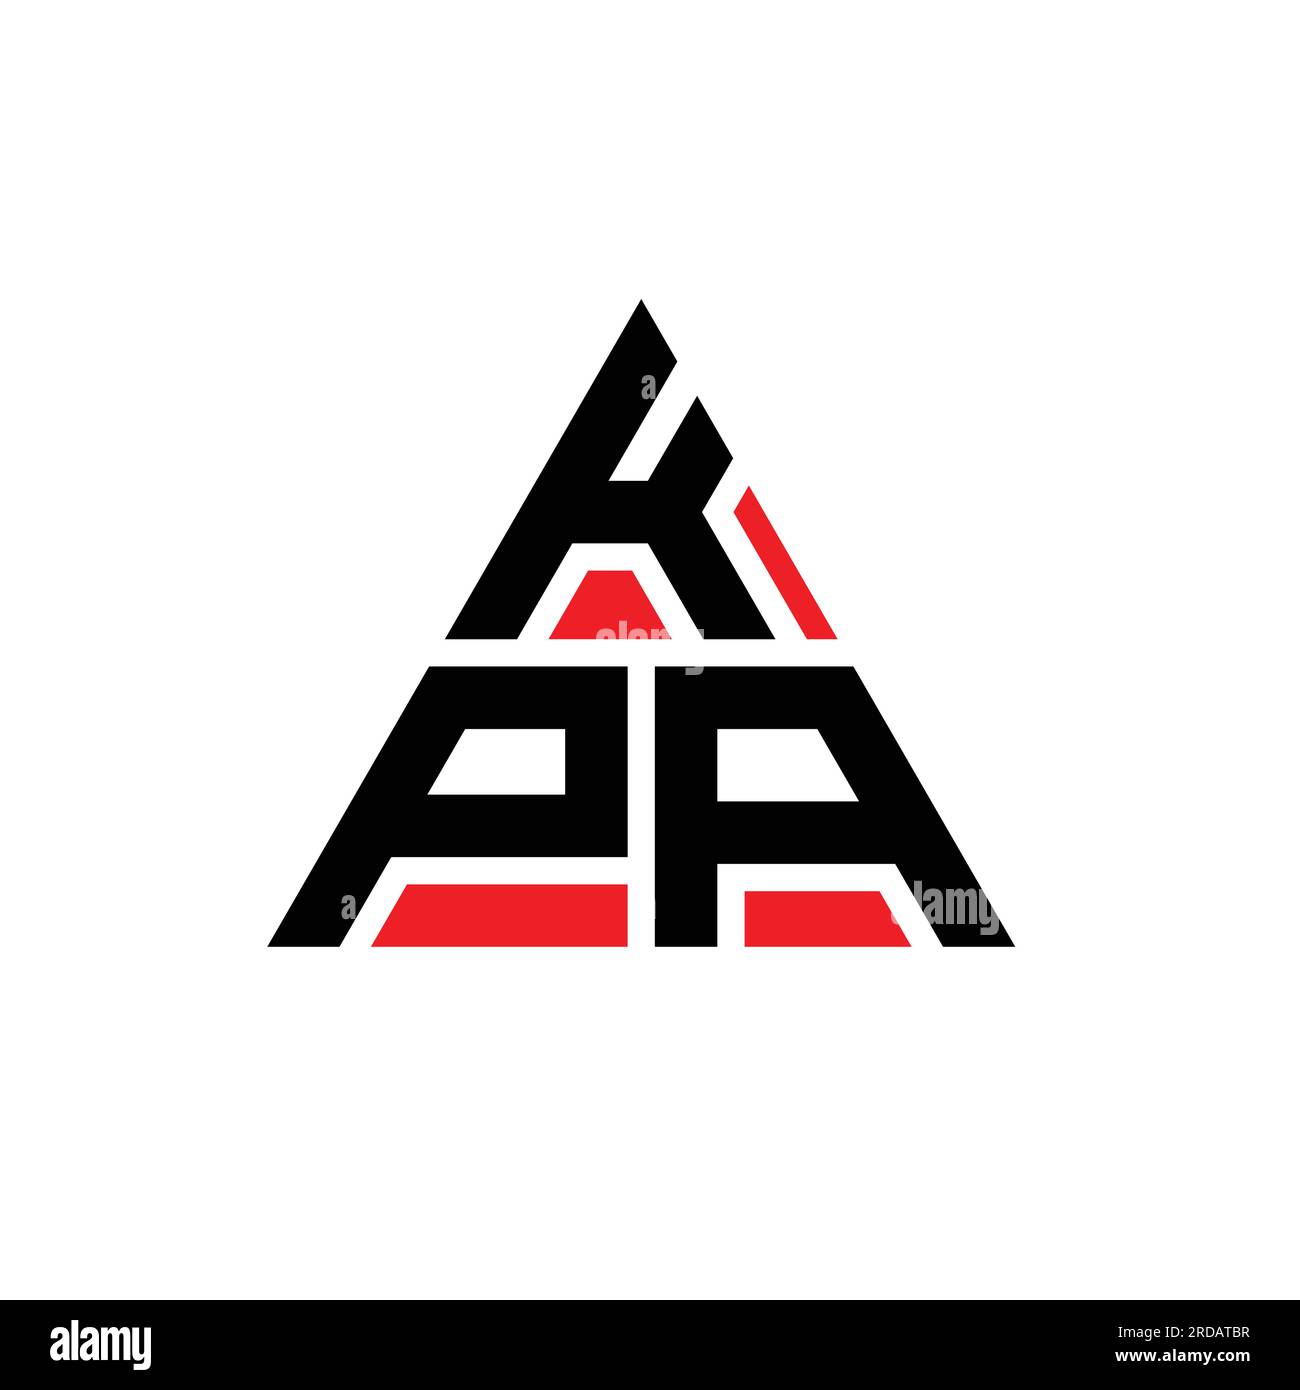 LOGO mit DREIECKIGEM KPA-Buchstaben in Dreiecksform. KPA Dreieck-Logo-Monogramm. KPA dreieckige Vektorvorlage mit roter Farbe. KPA Triangul Stock Vektor